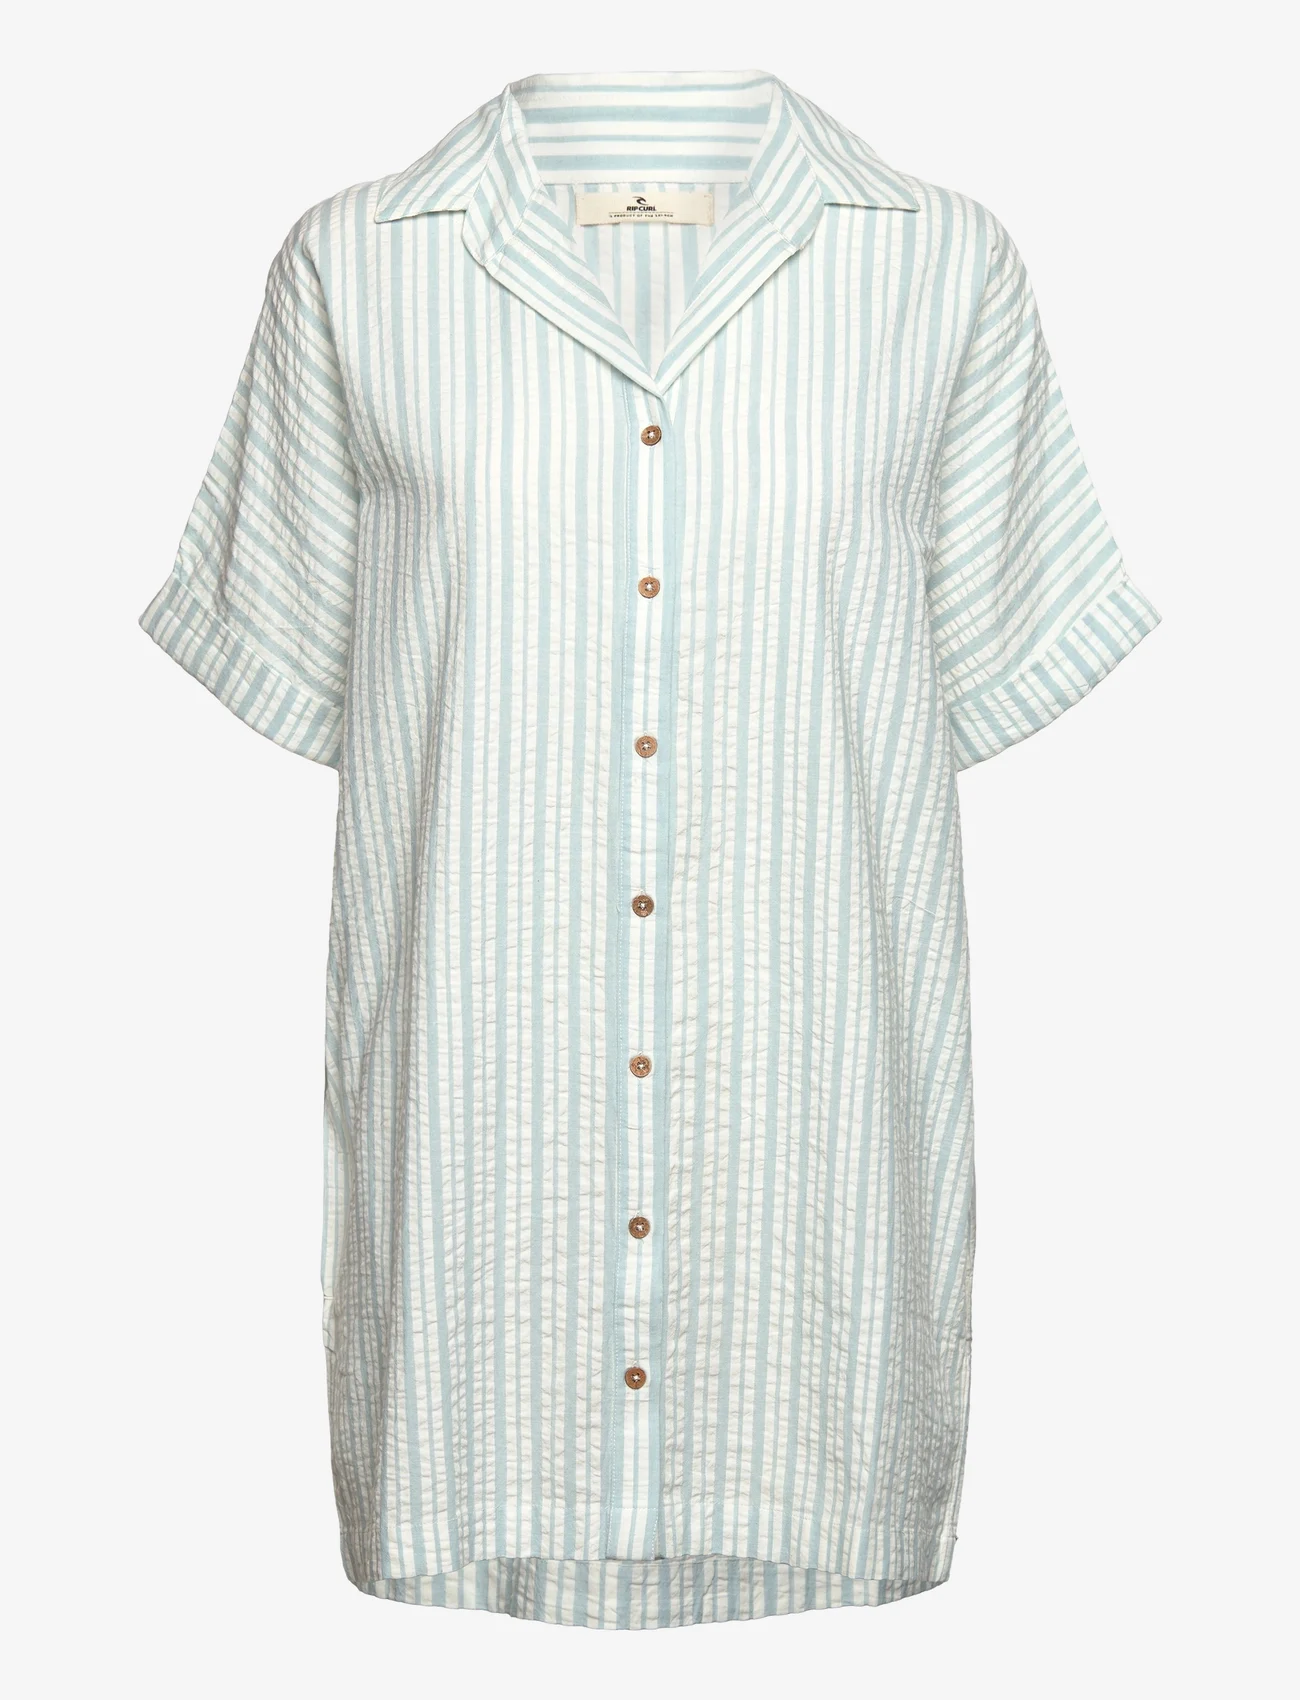 Rip Curl - FOLLOW THE SUN SHIRT DRESS - shirt dresses - blue/white - 0